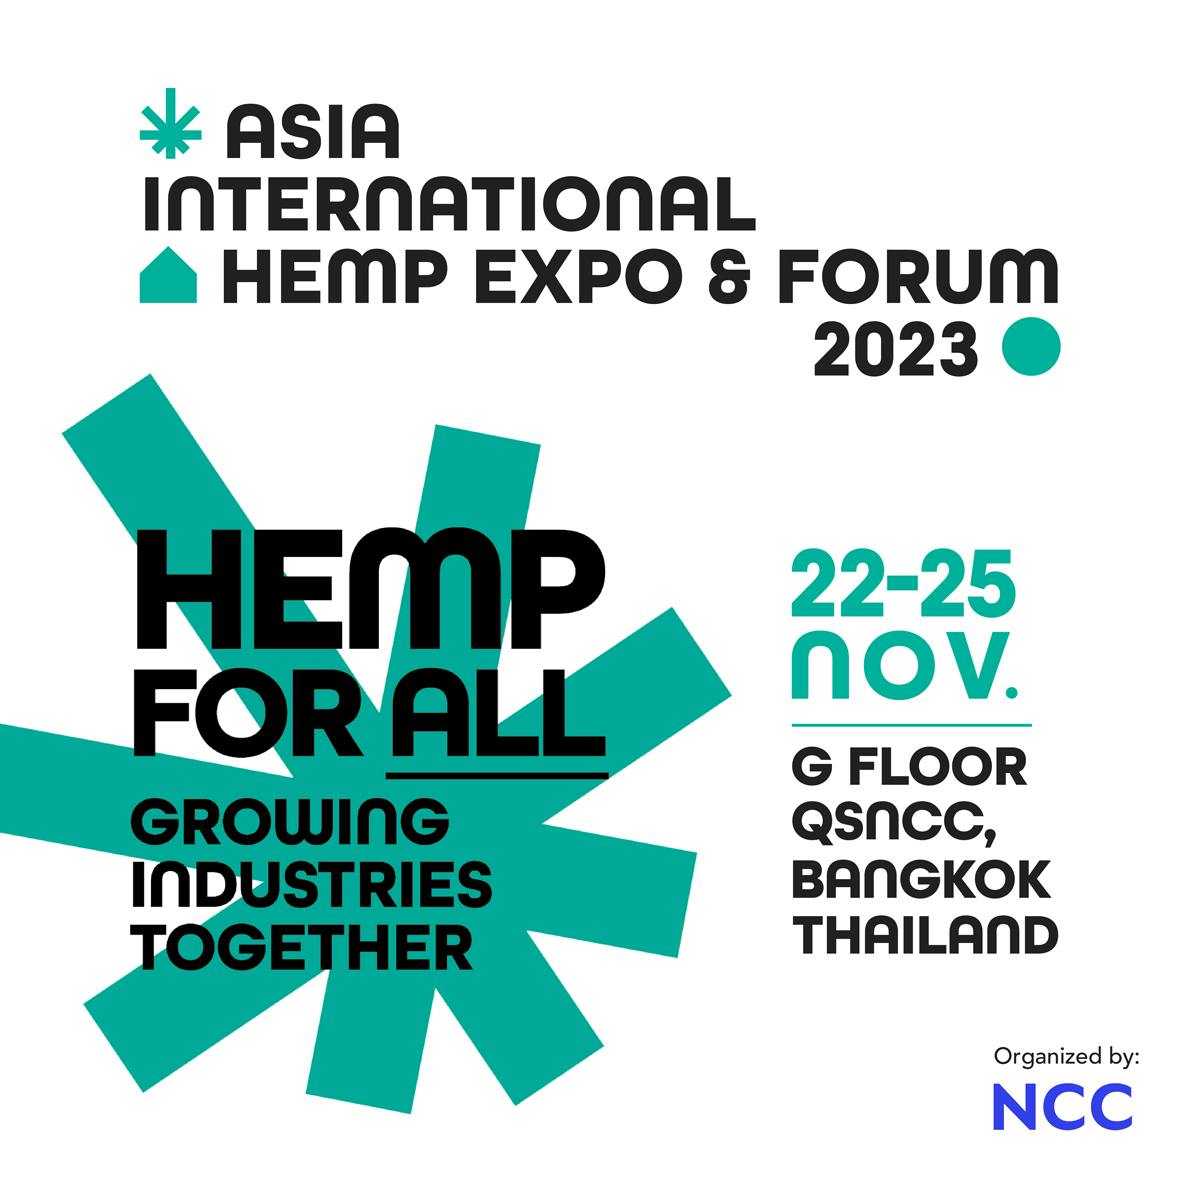 Asia international hemp expo & forum 2023